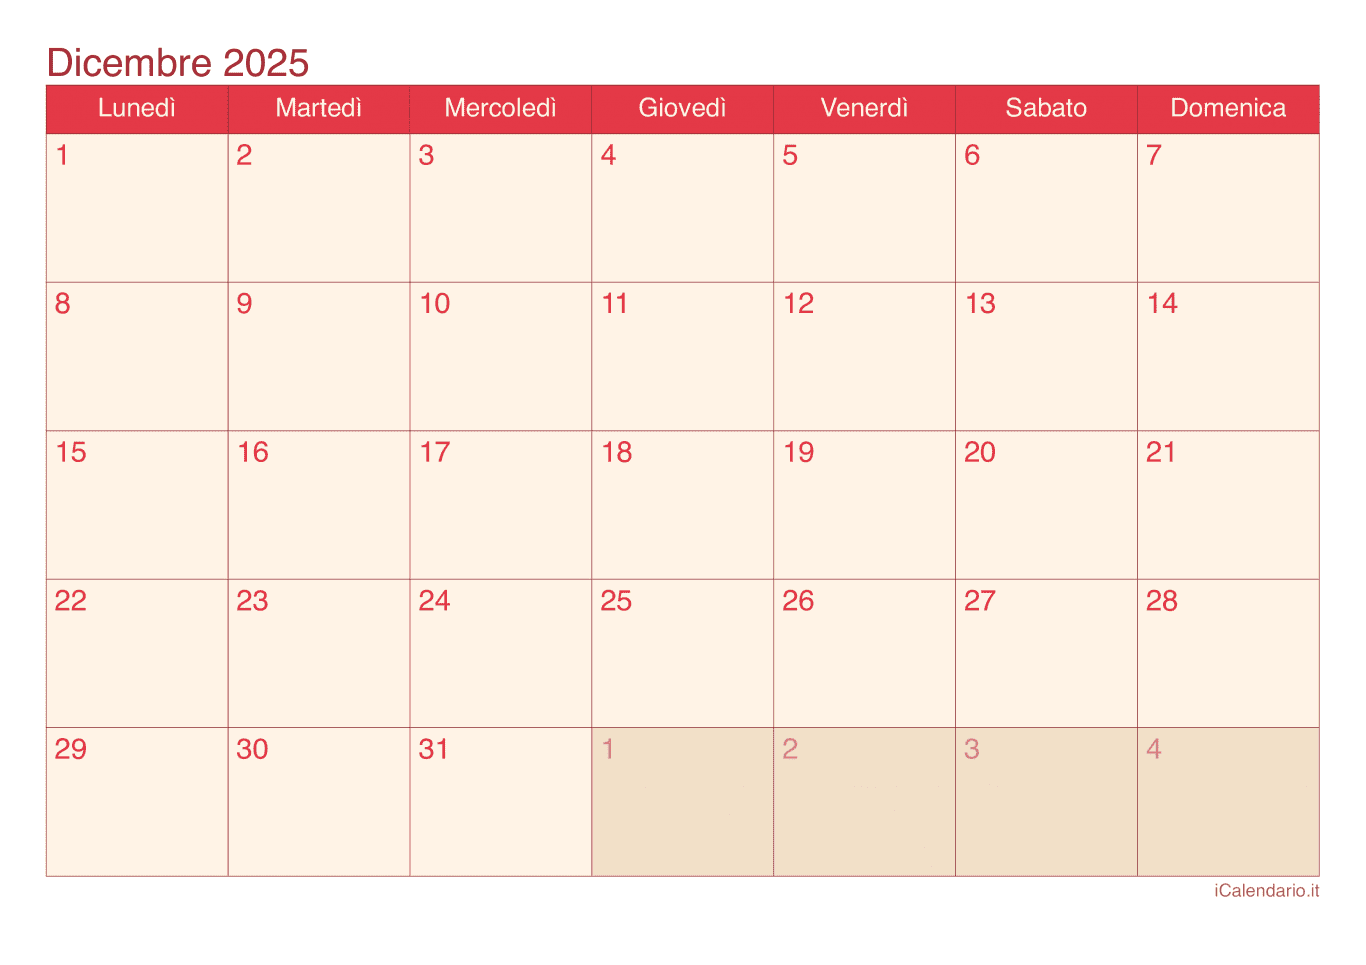 Calendario di dicembre 2025 - Cherry